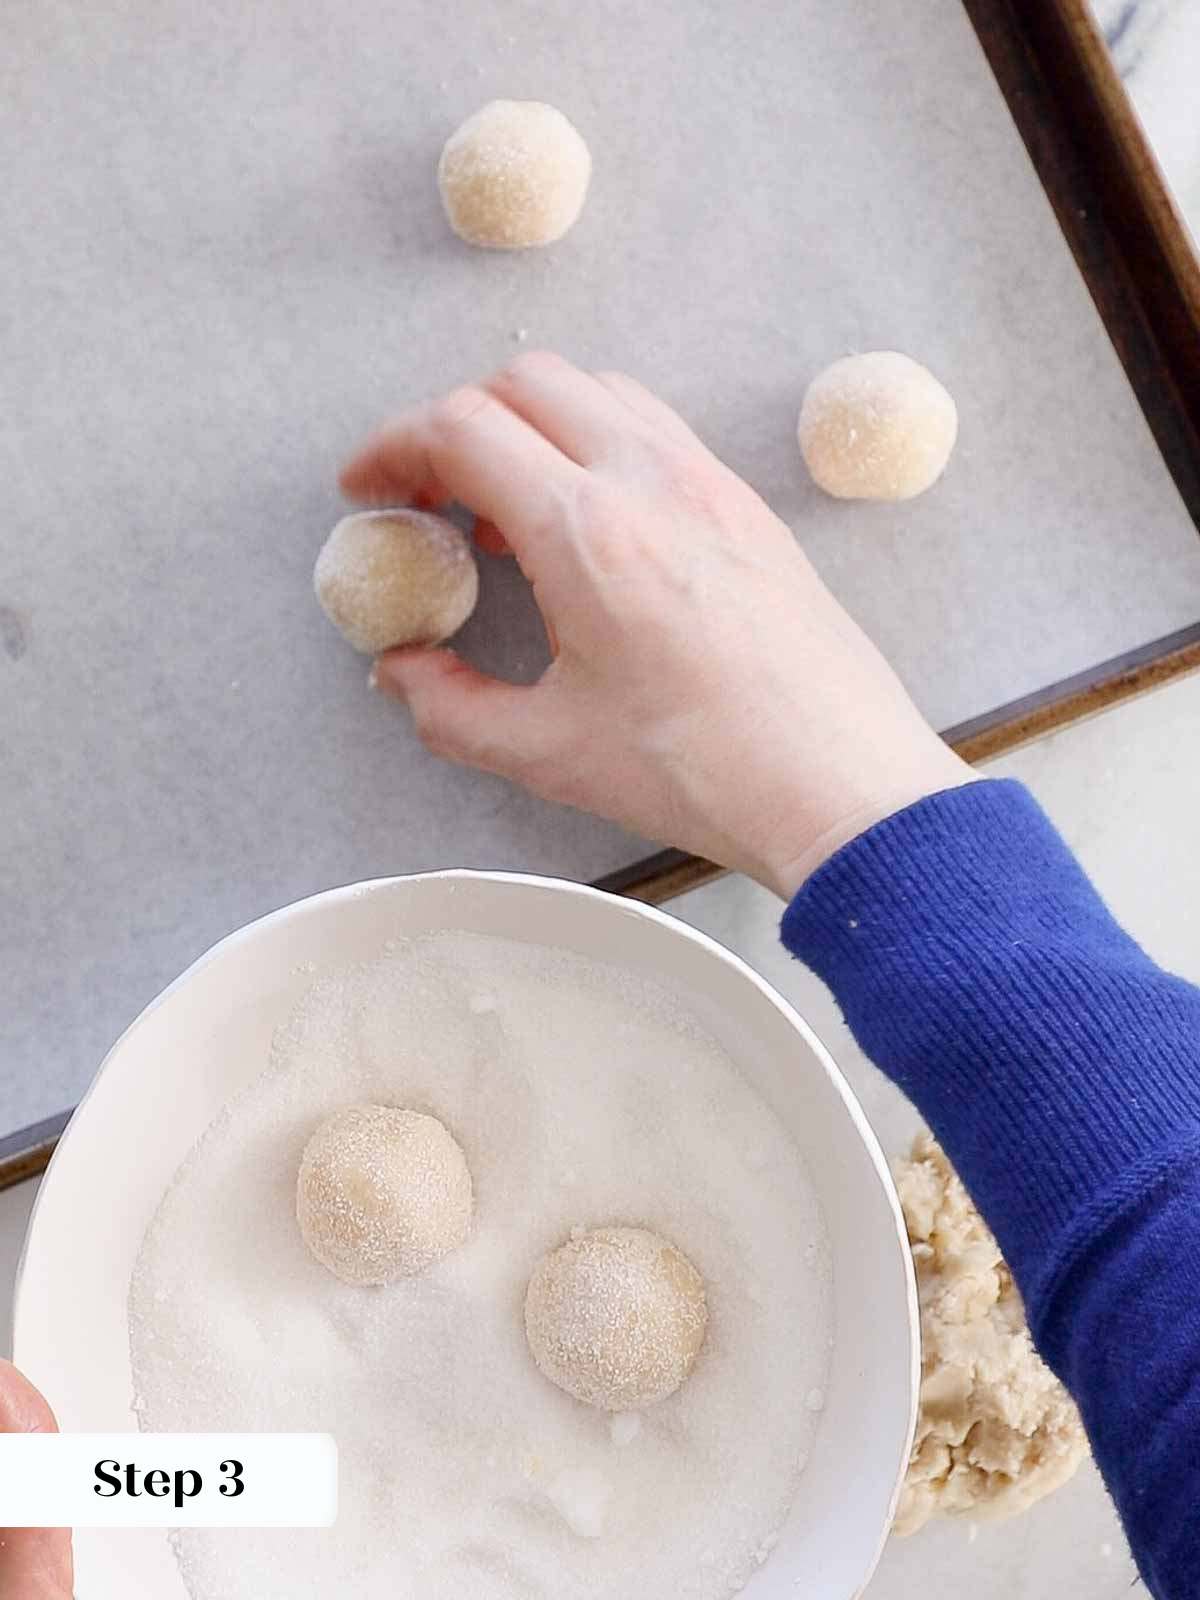 rolling dough in sugar them placing on baking sheet.